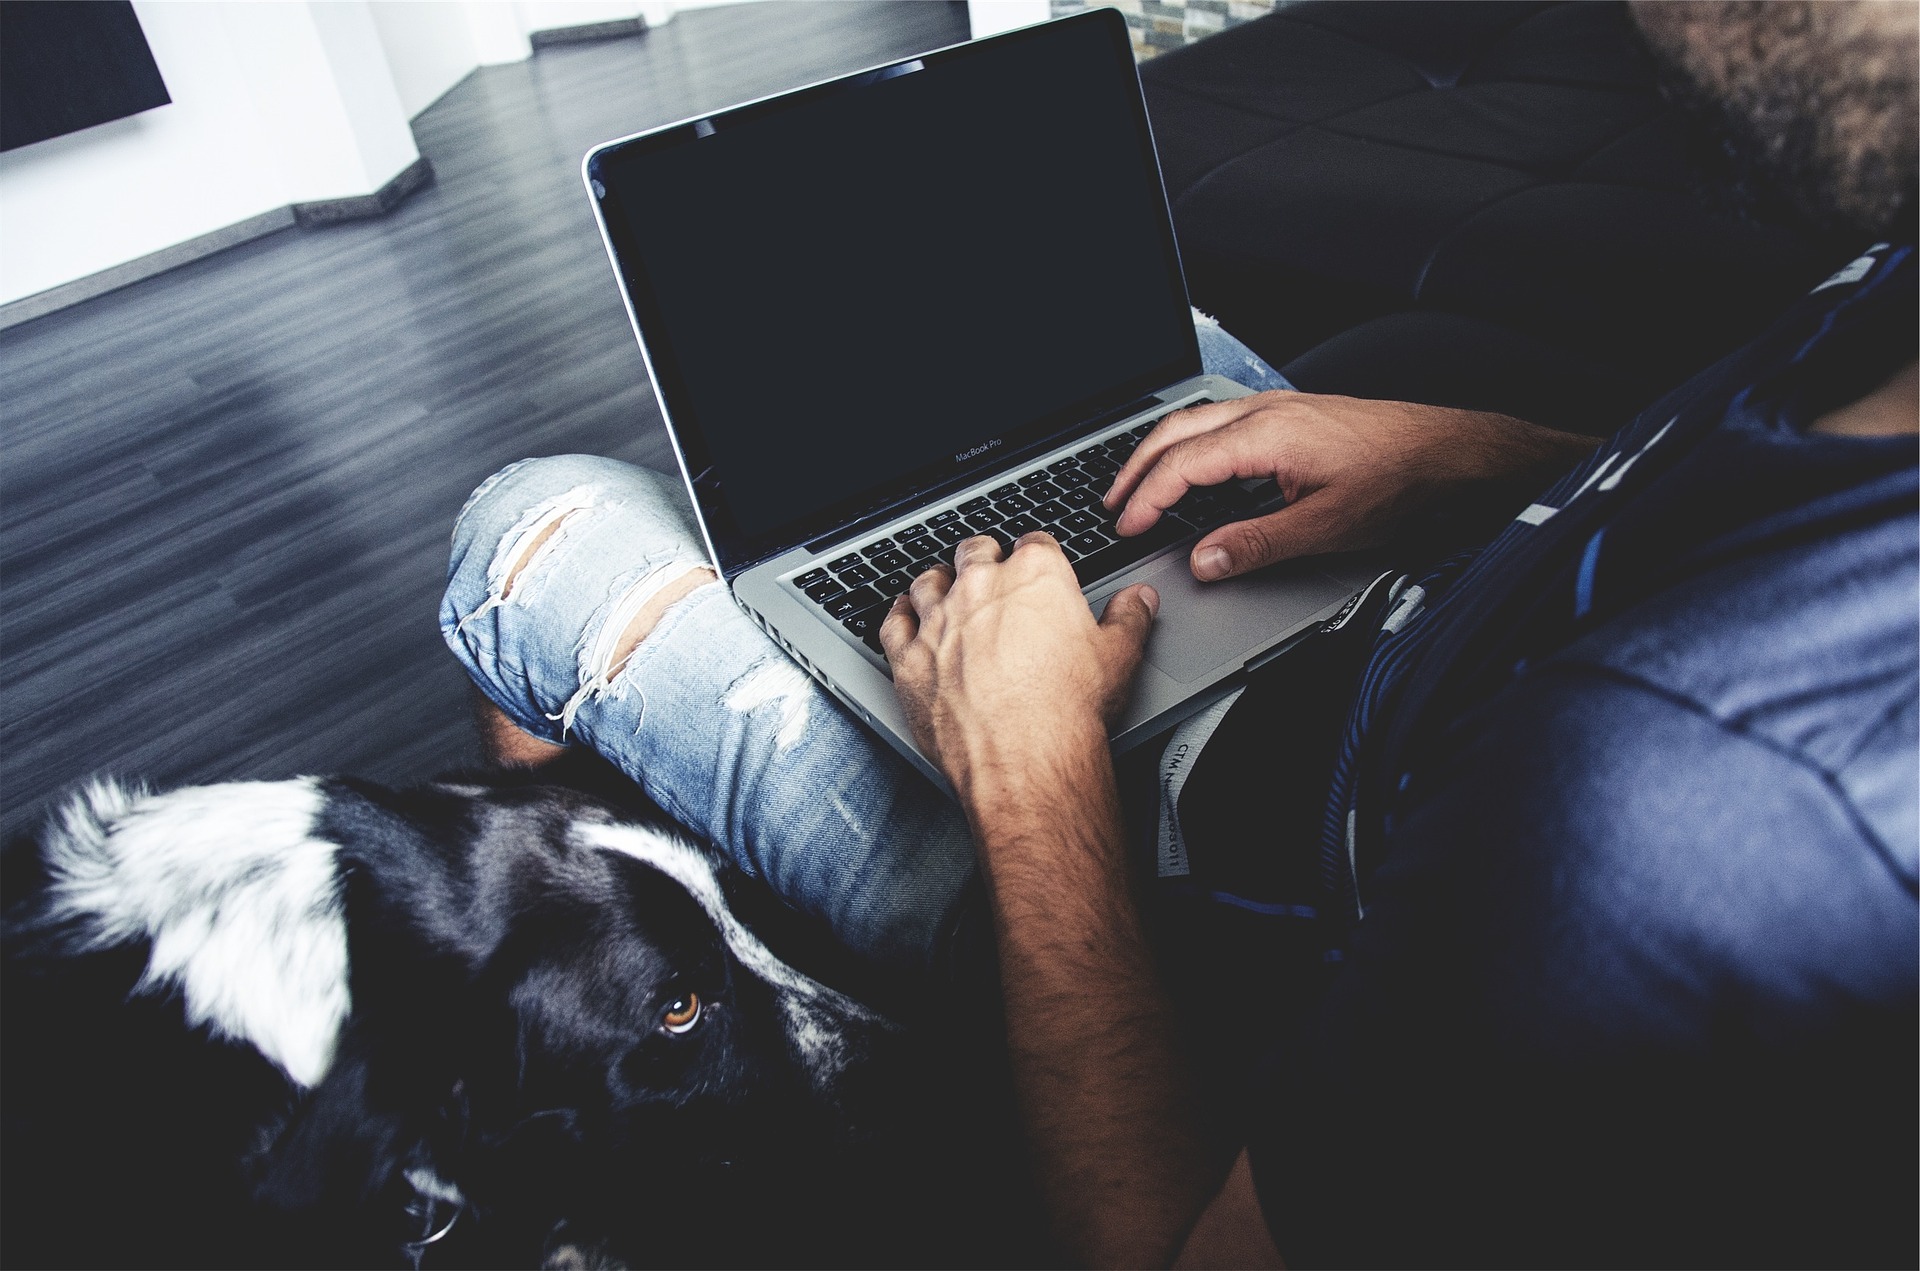 Man sitting with laptop on his lap, next to dog